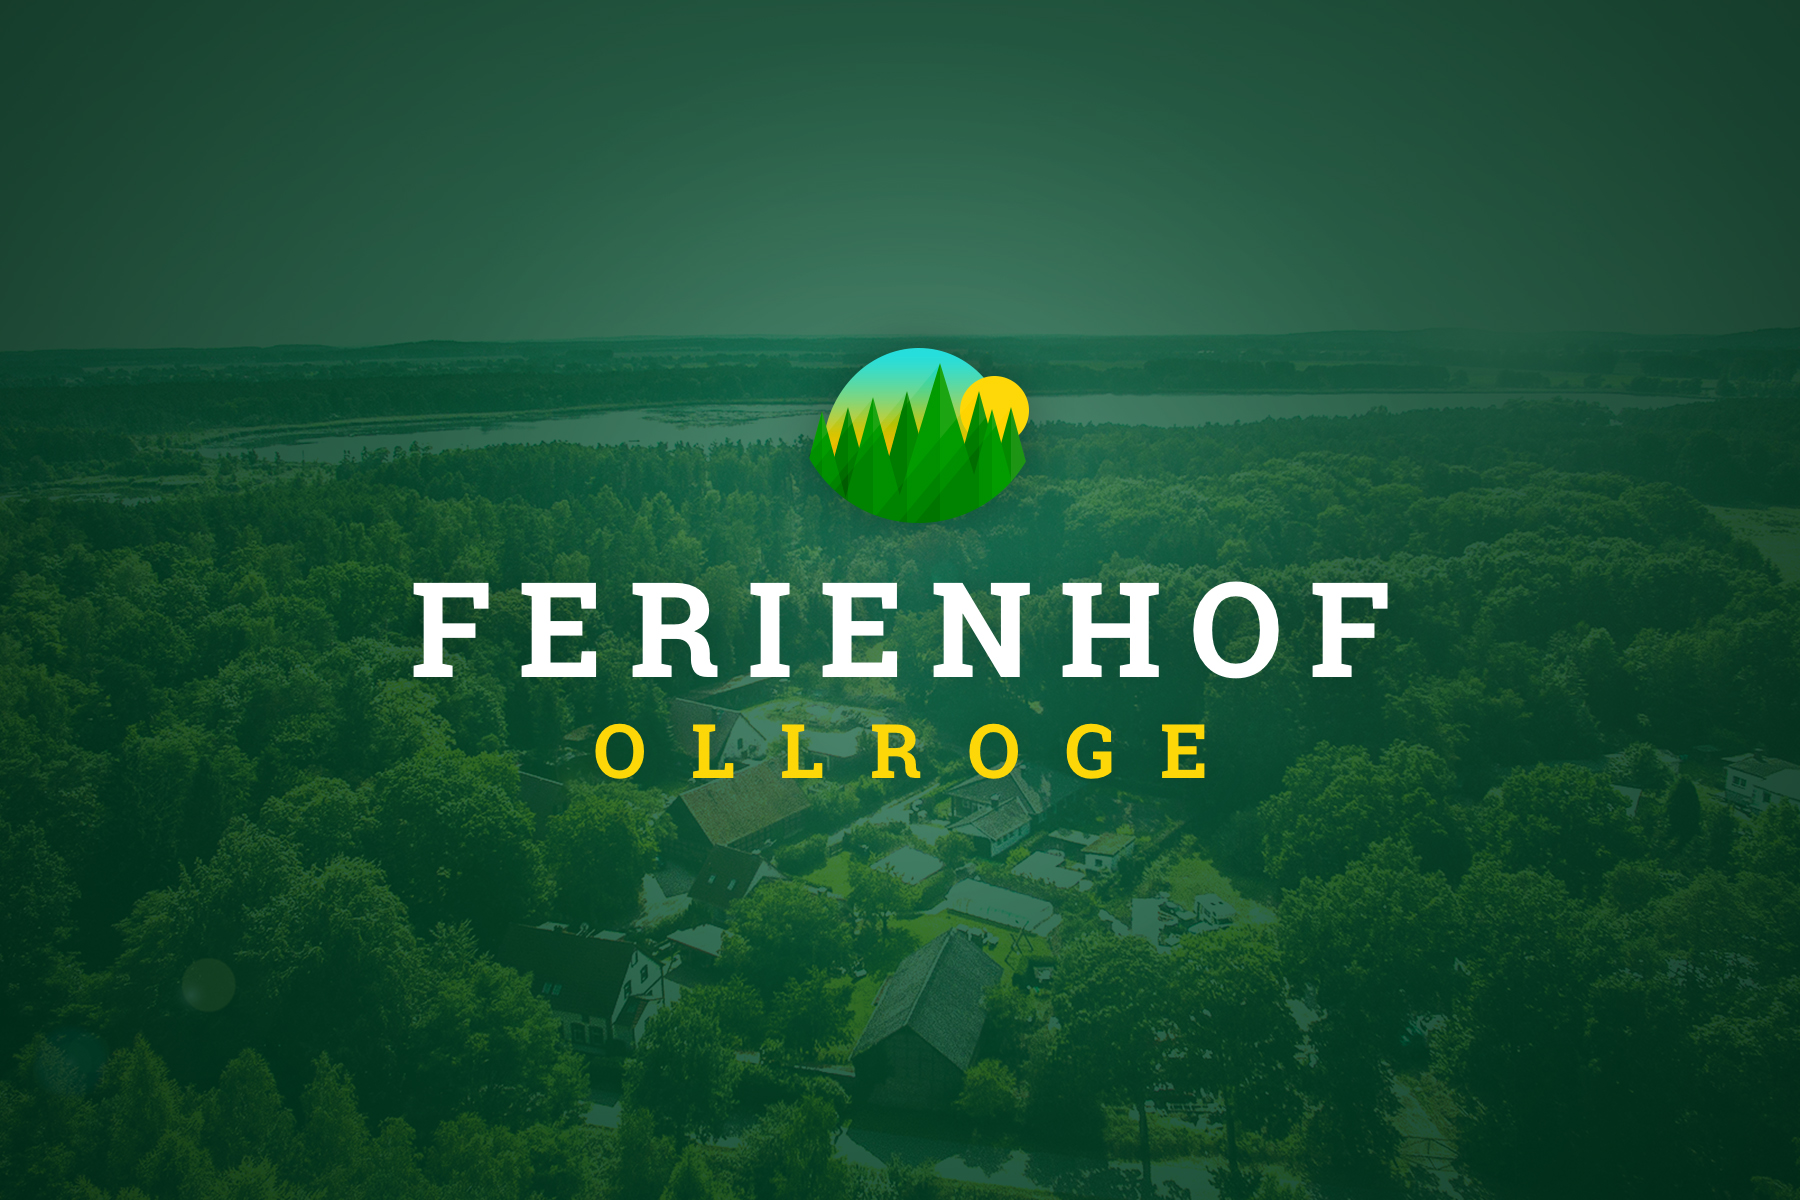 (c) Ferienhof-ollroge.de